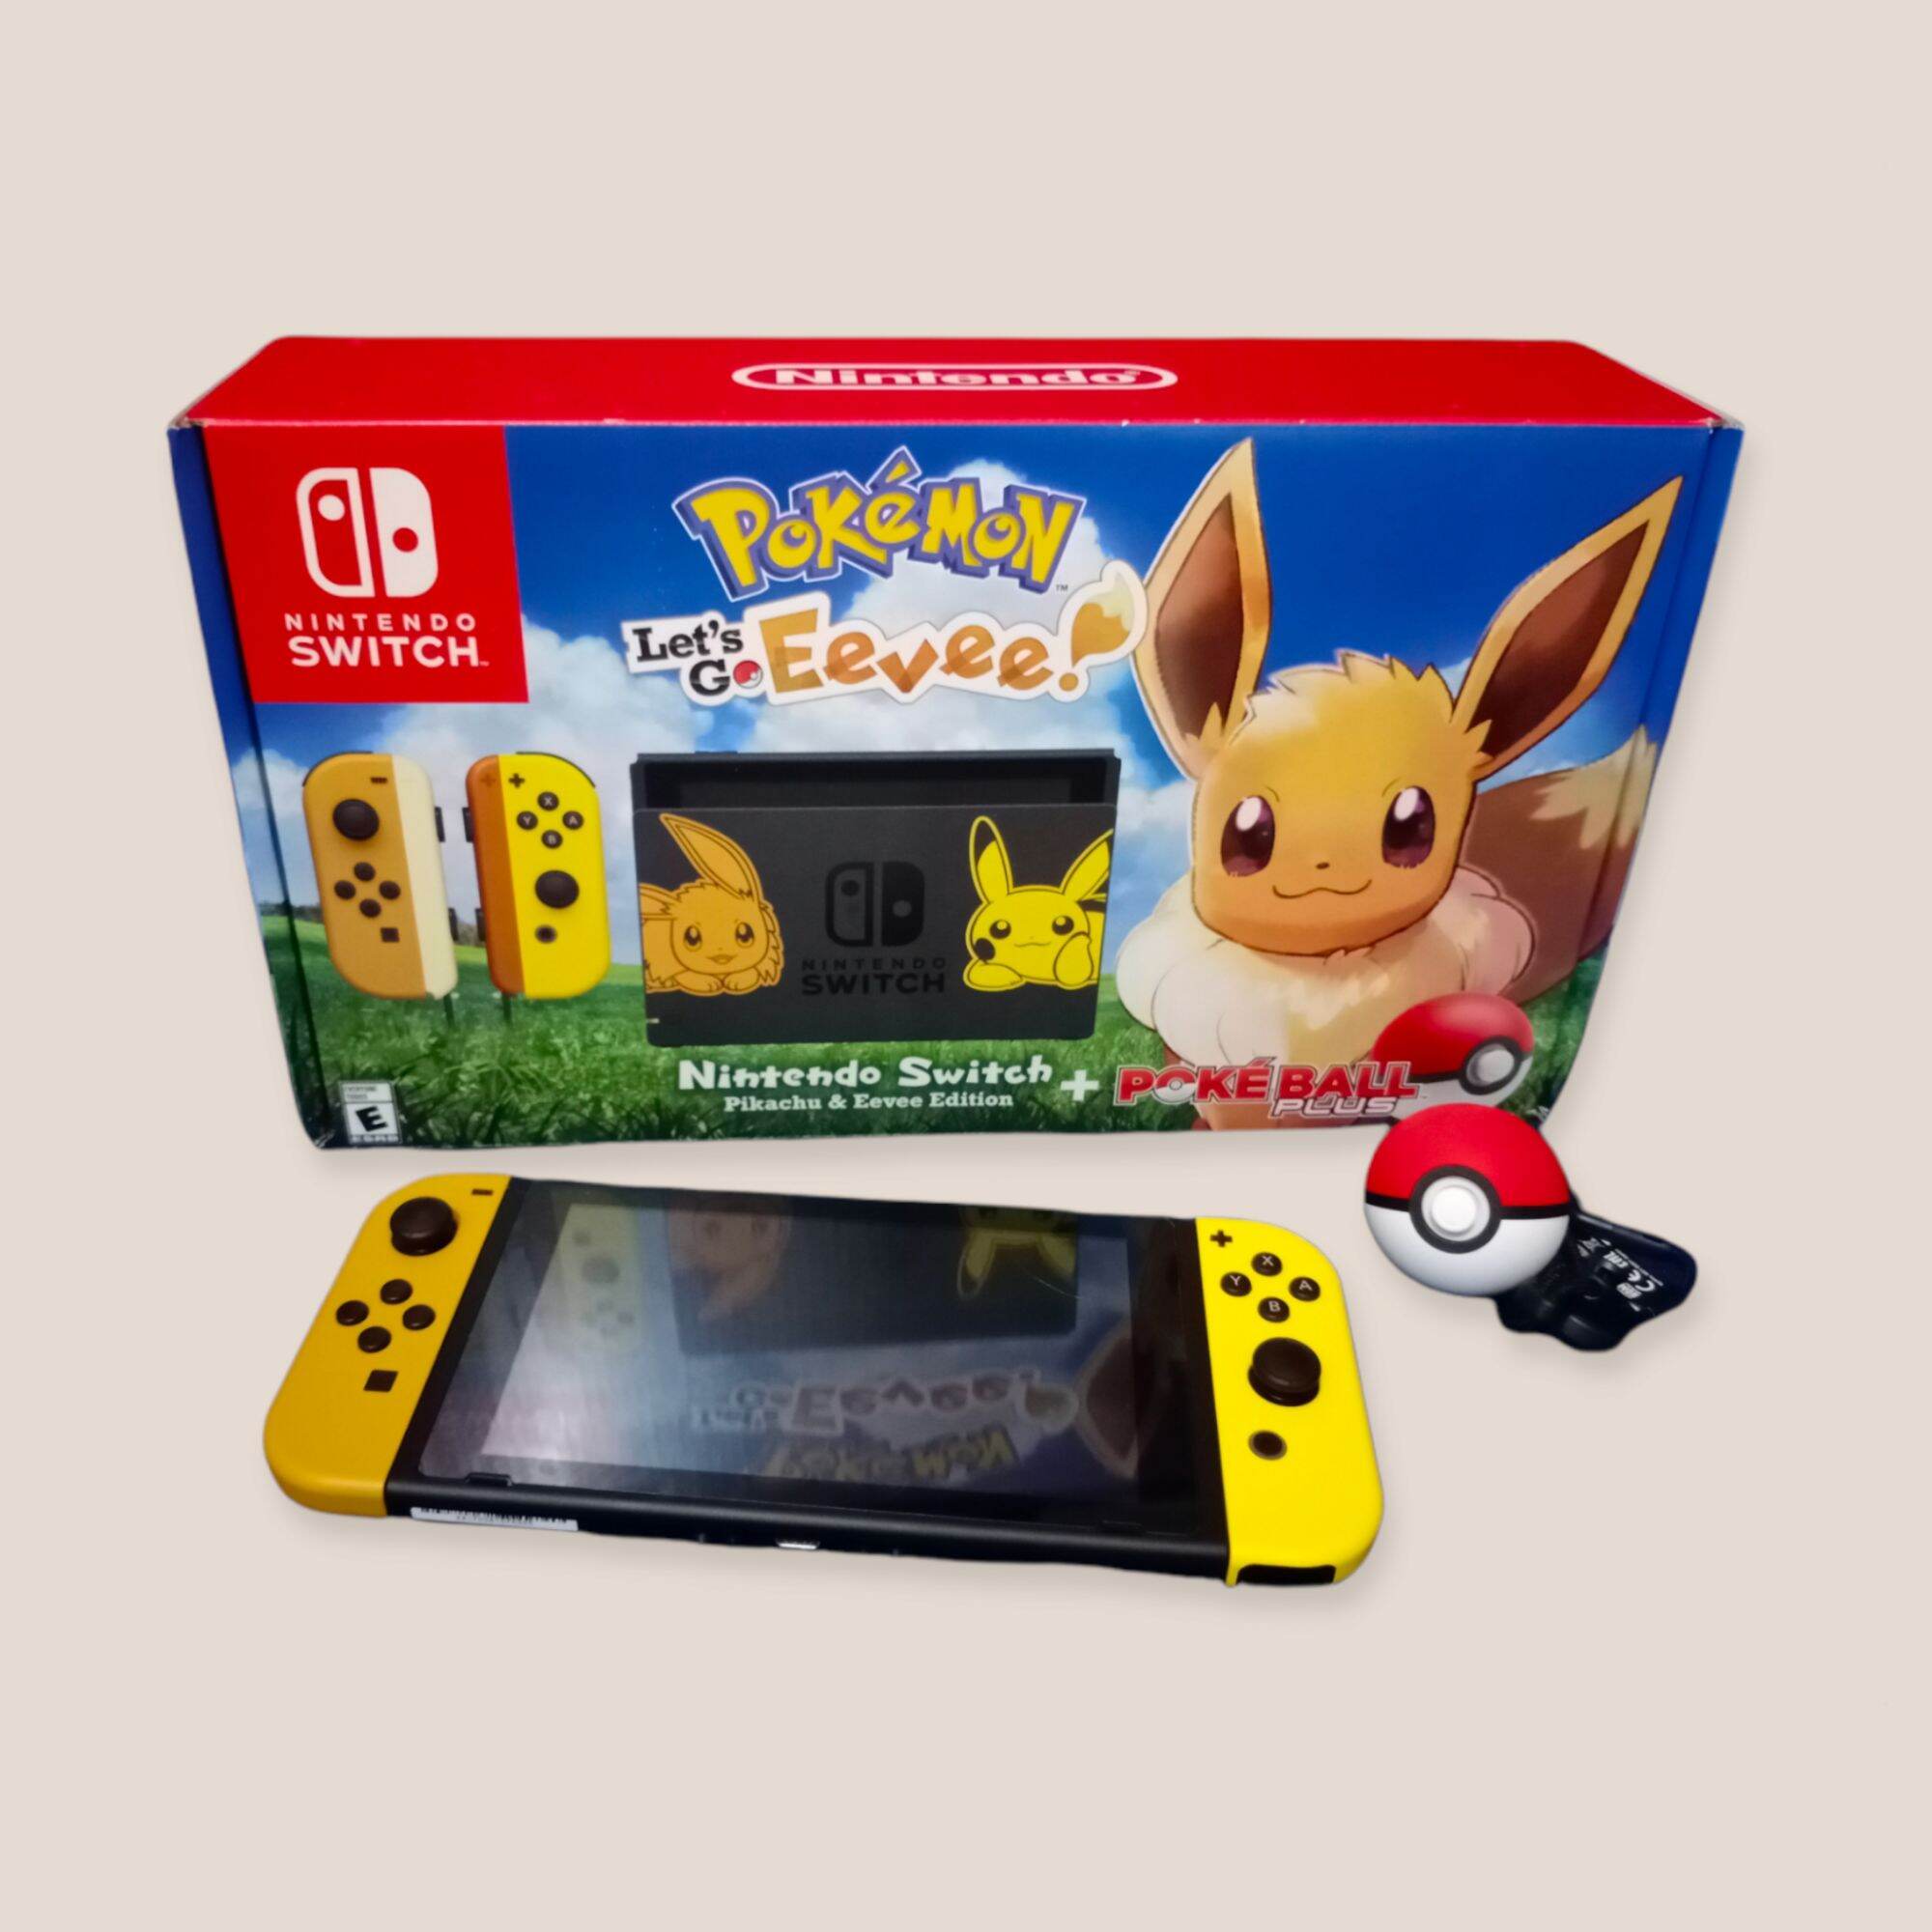 Nintendo Switch Pikachu & Eevee Edition with Let's Go Pikachu! Bundle + Poke Ball Plus [USED] | Lazada